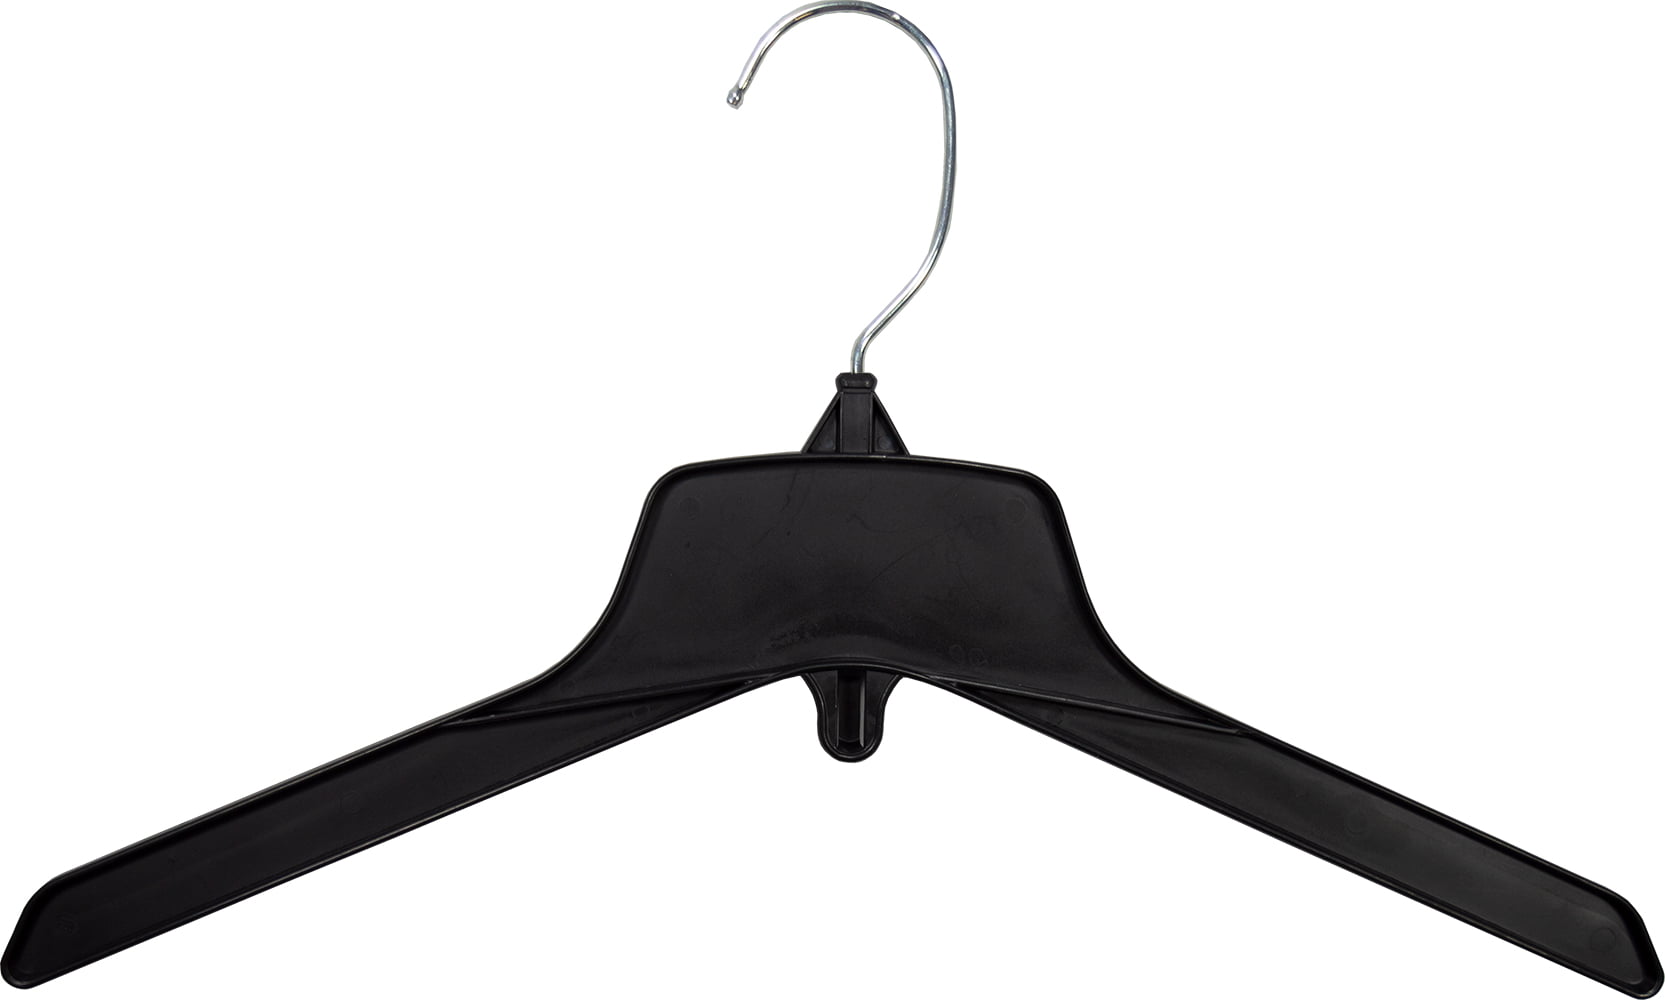 HAY Hang Coat Hangers - 5 Pack Black